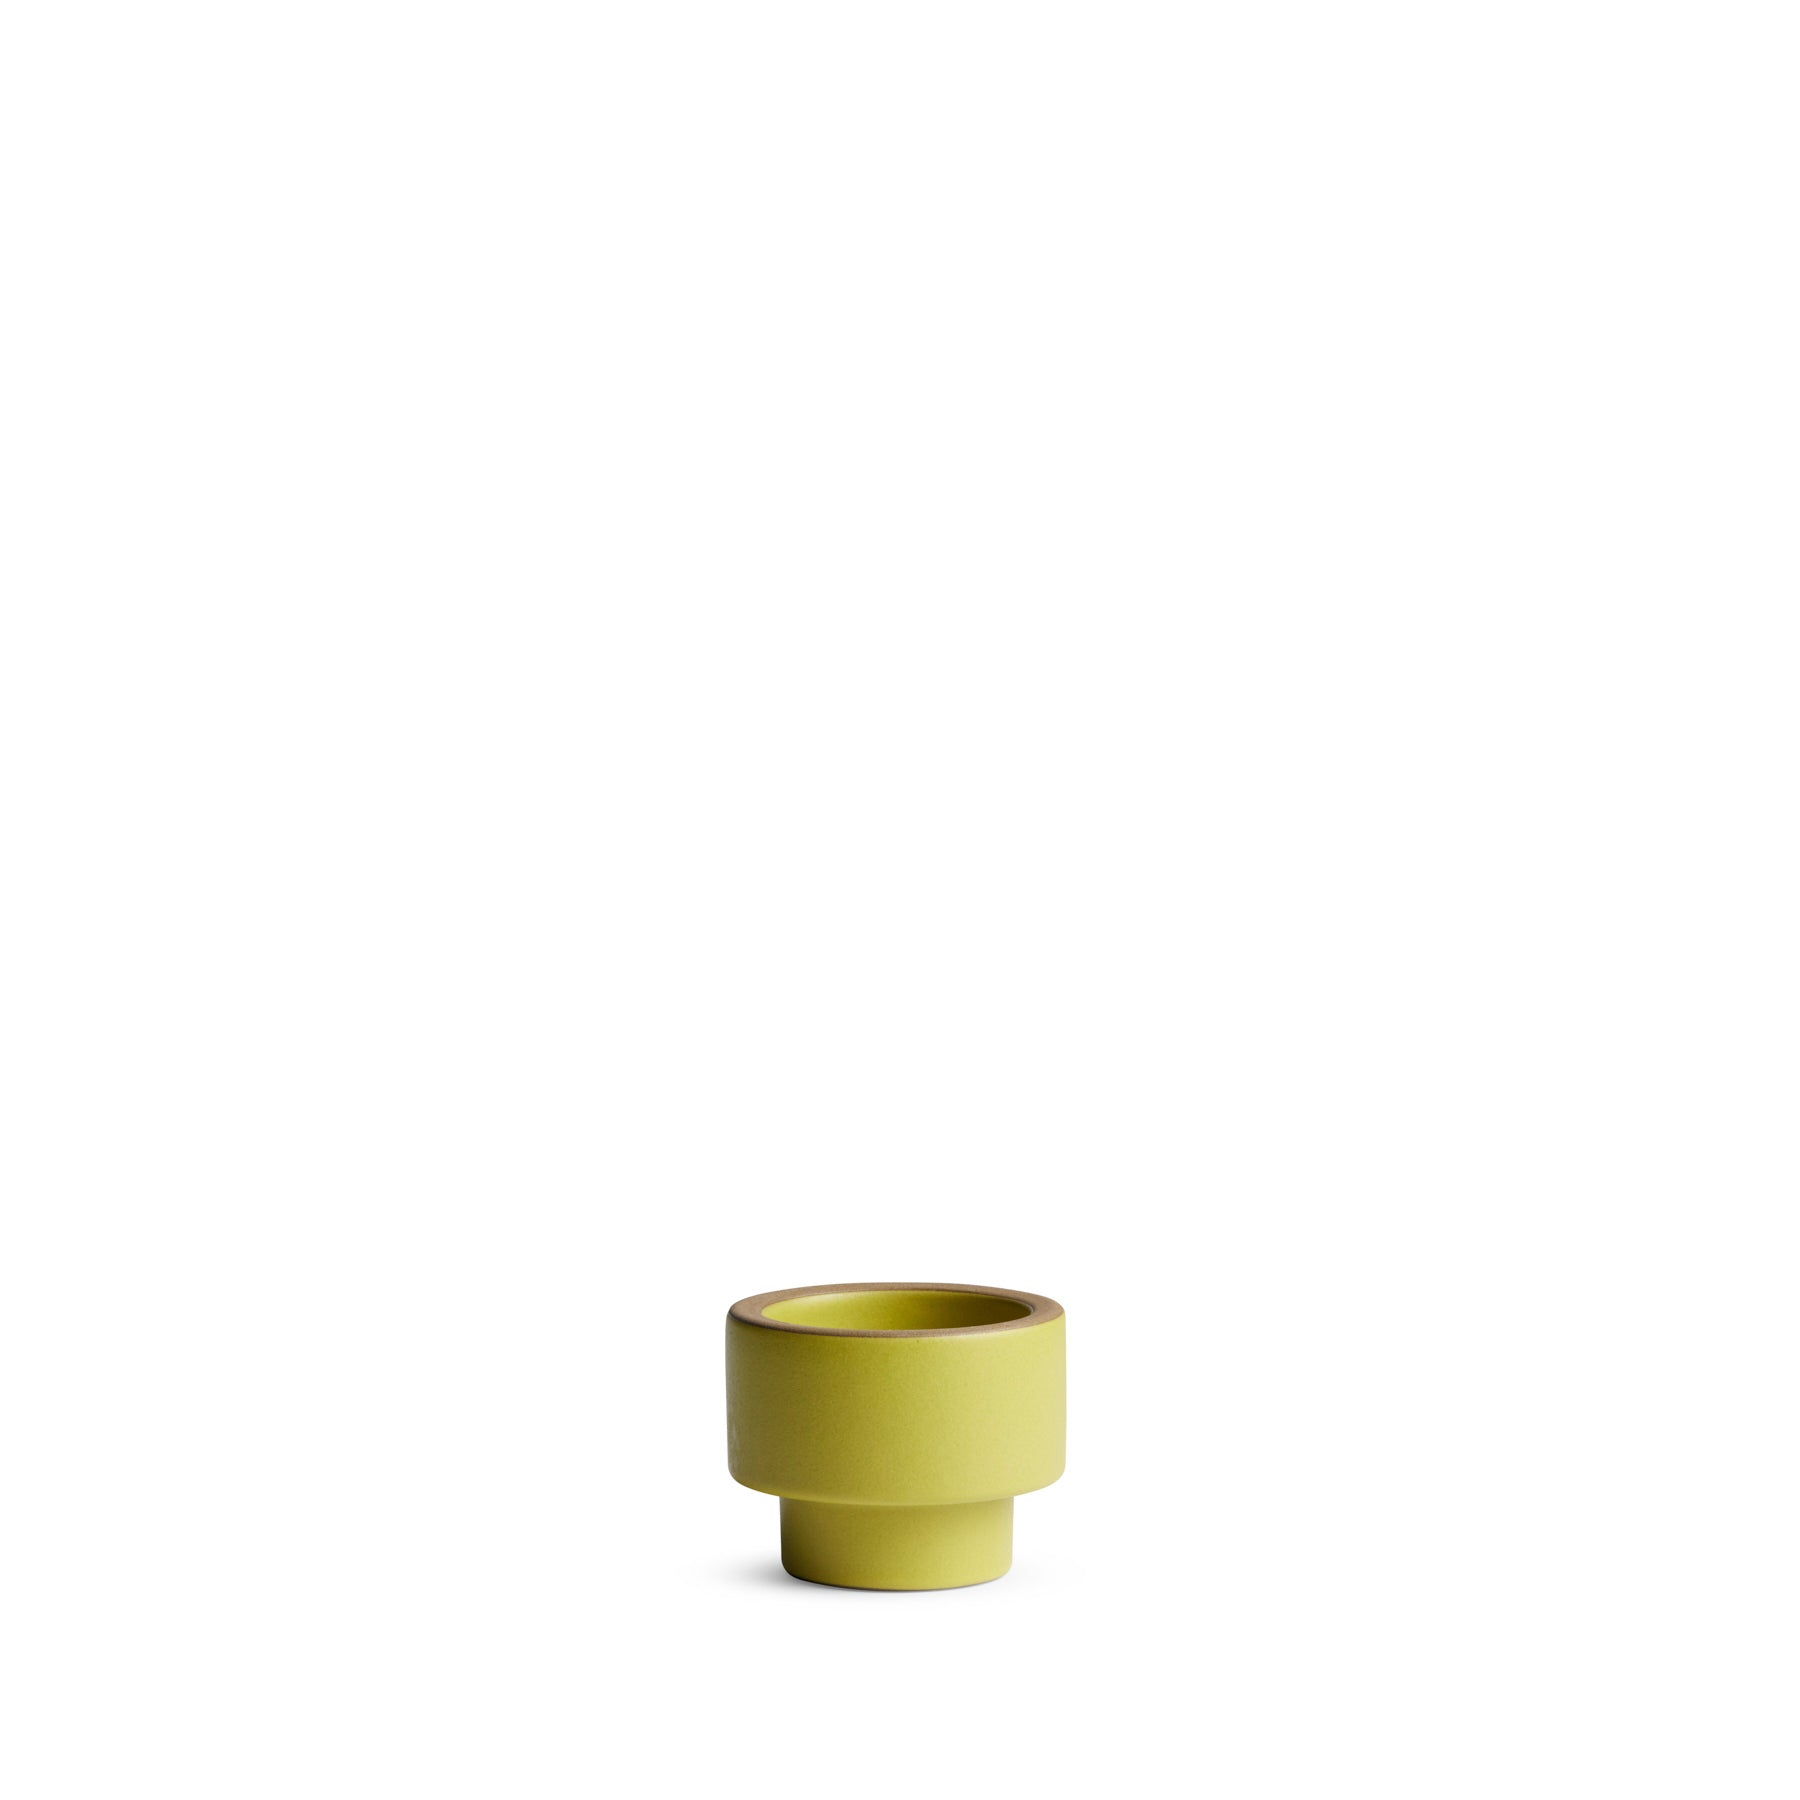 Candleholder in Avocado Zoom Image 1